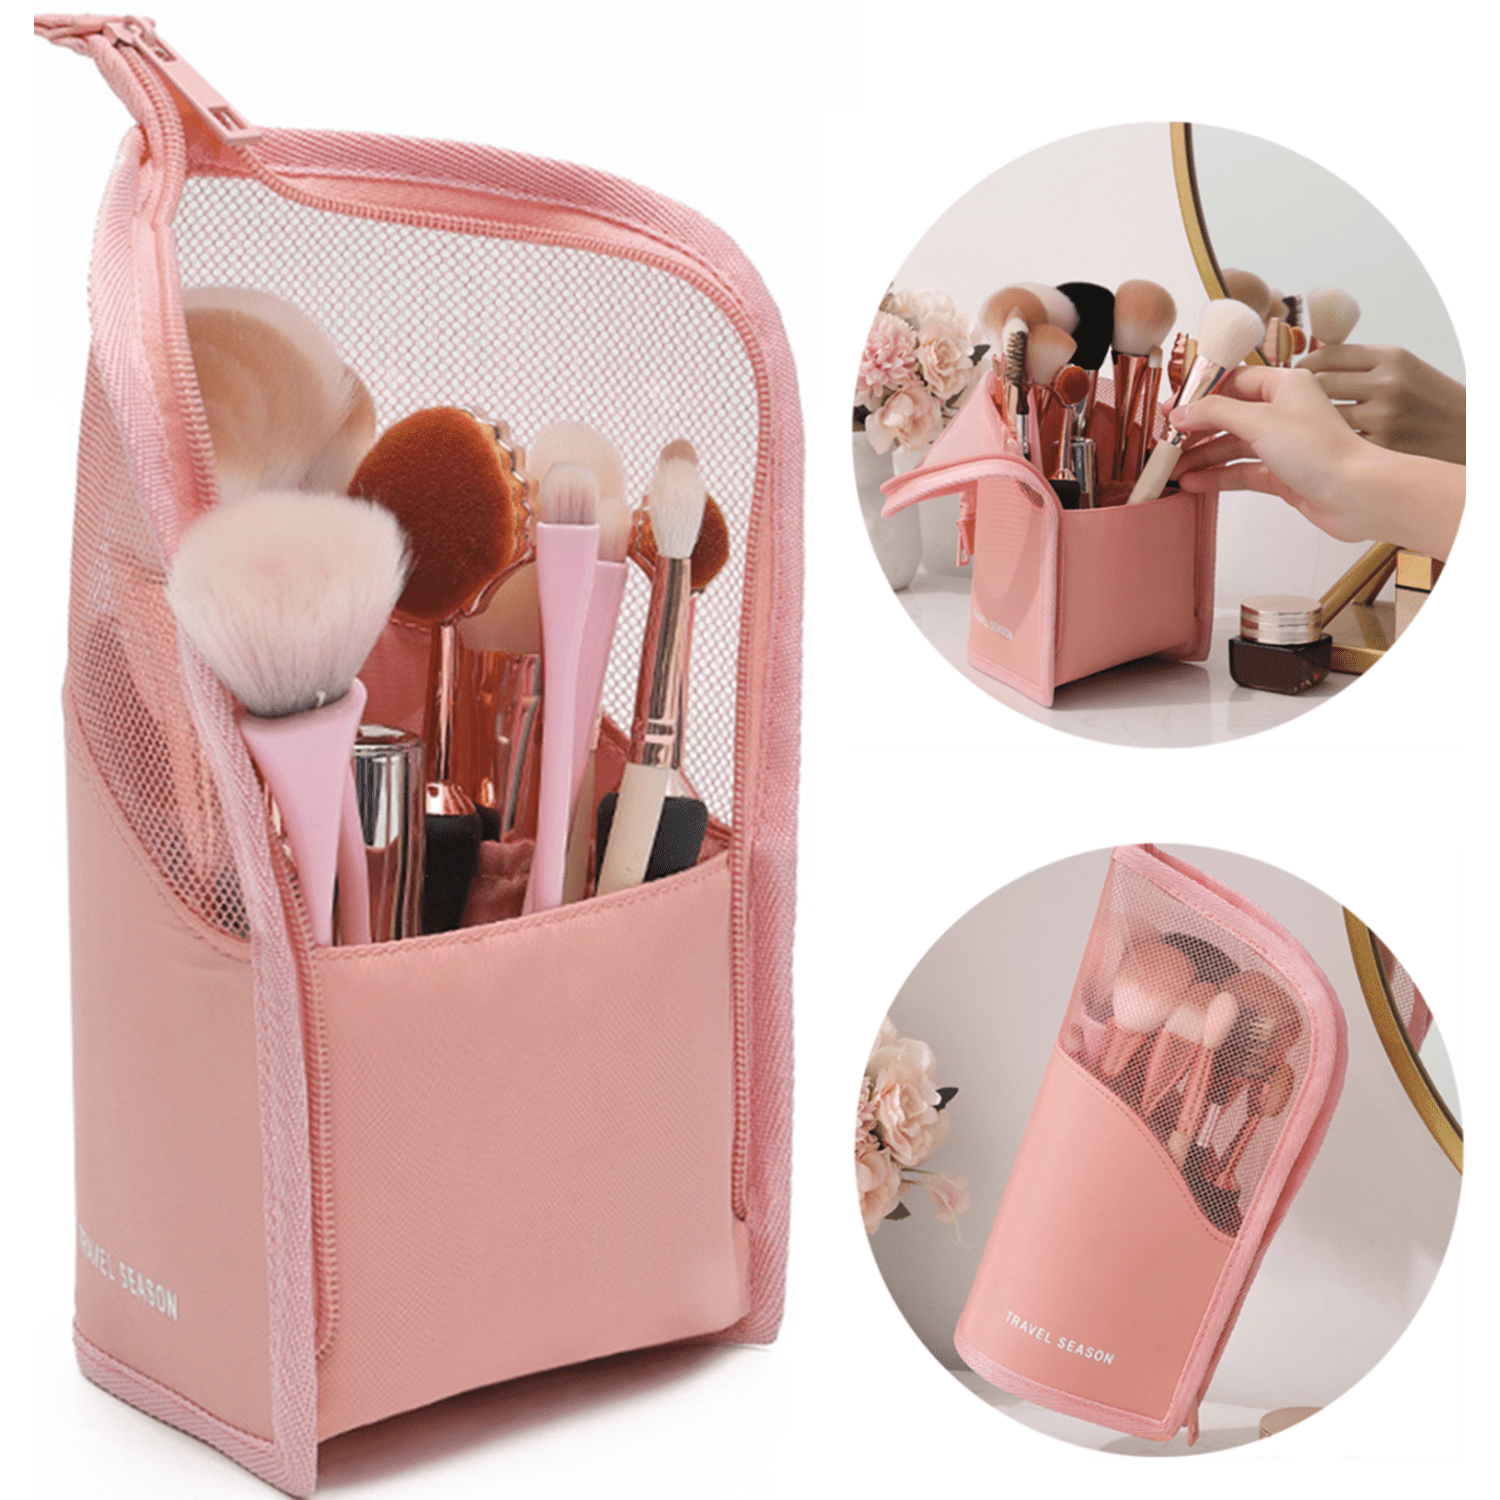 Marble Makeup Brush Holder Makeup Brush Case Organizer Travel Makeup Brush Pouch Stand-up Foldable Portable Makeup Artist Storage Bag for Women Pink 